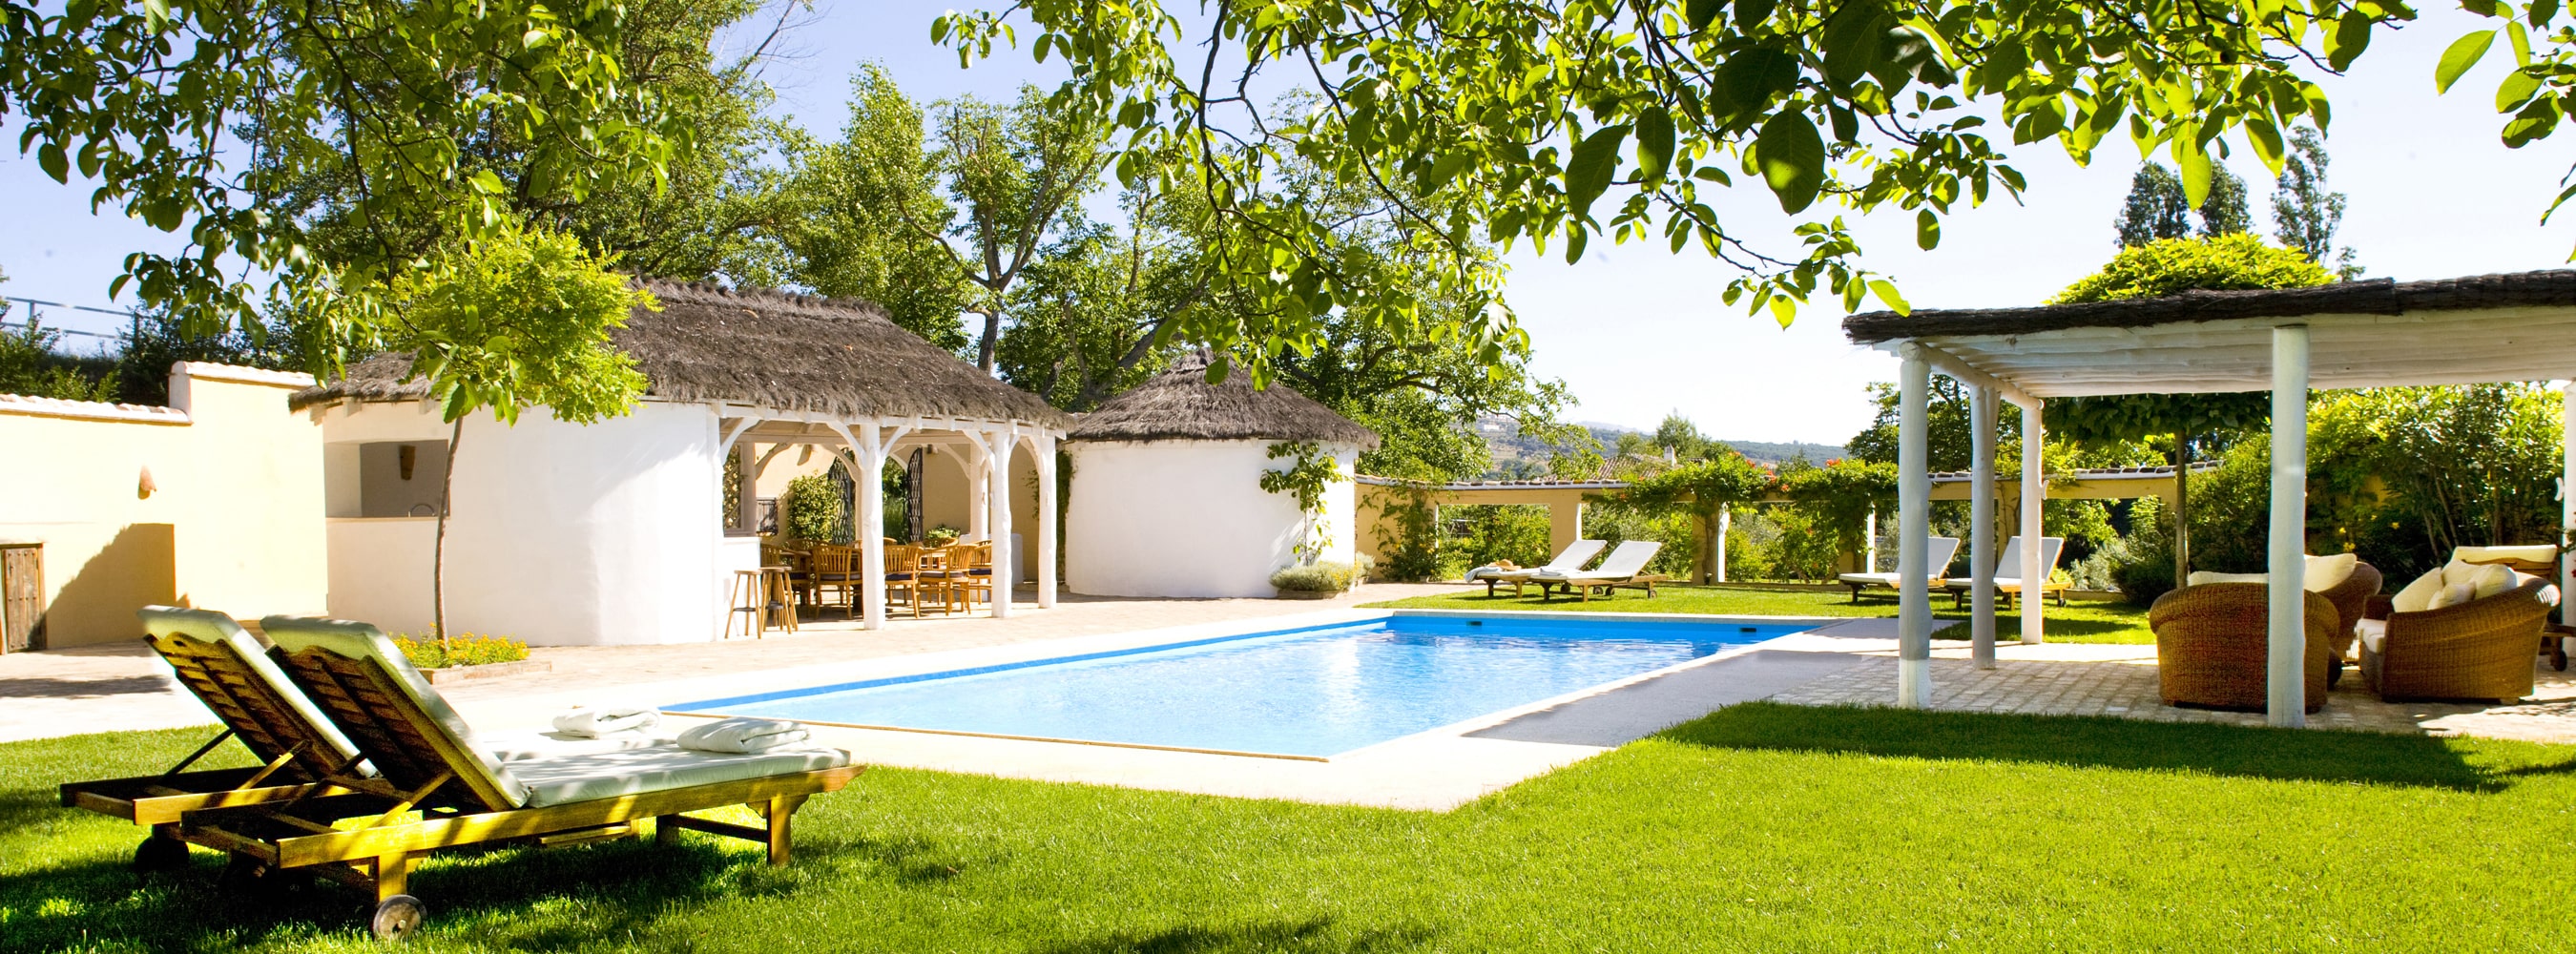 luxury villa in ronda andalucia